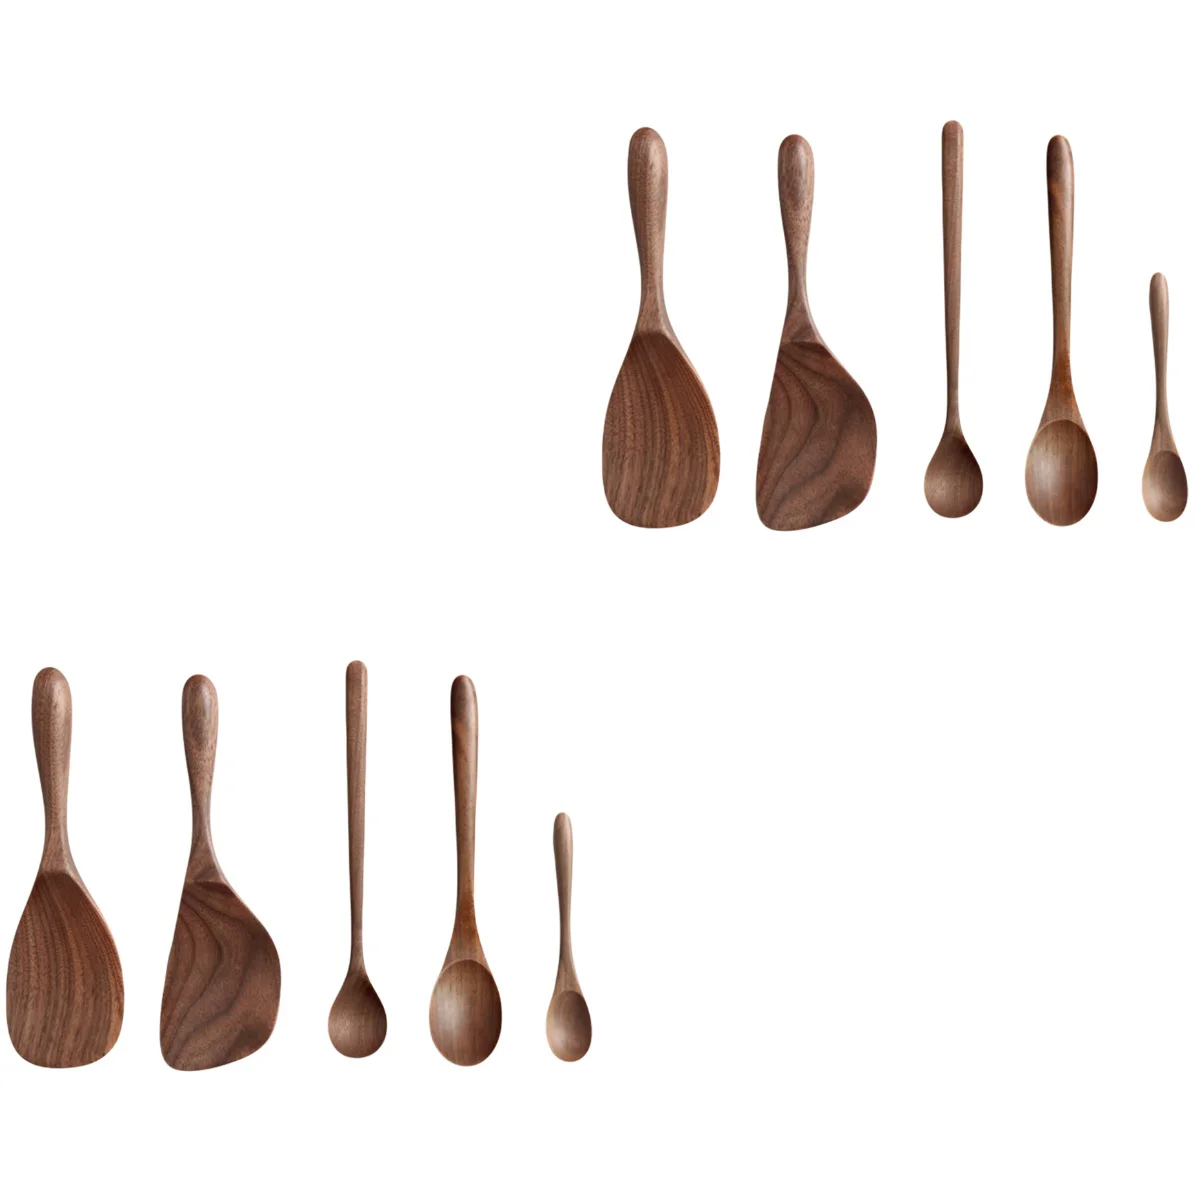 

Wooden Set Kitchen Spoon Utensils Utensil Wood Cooking Spoons Cookware Serving Rice Dinnerware Tableware Bamboo Reusable Ladle